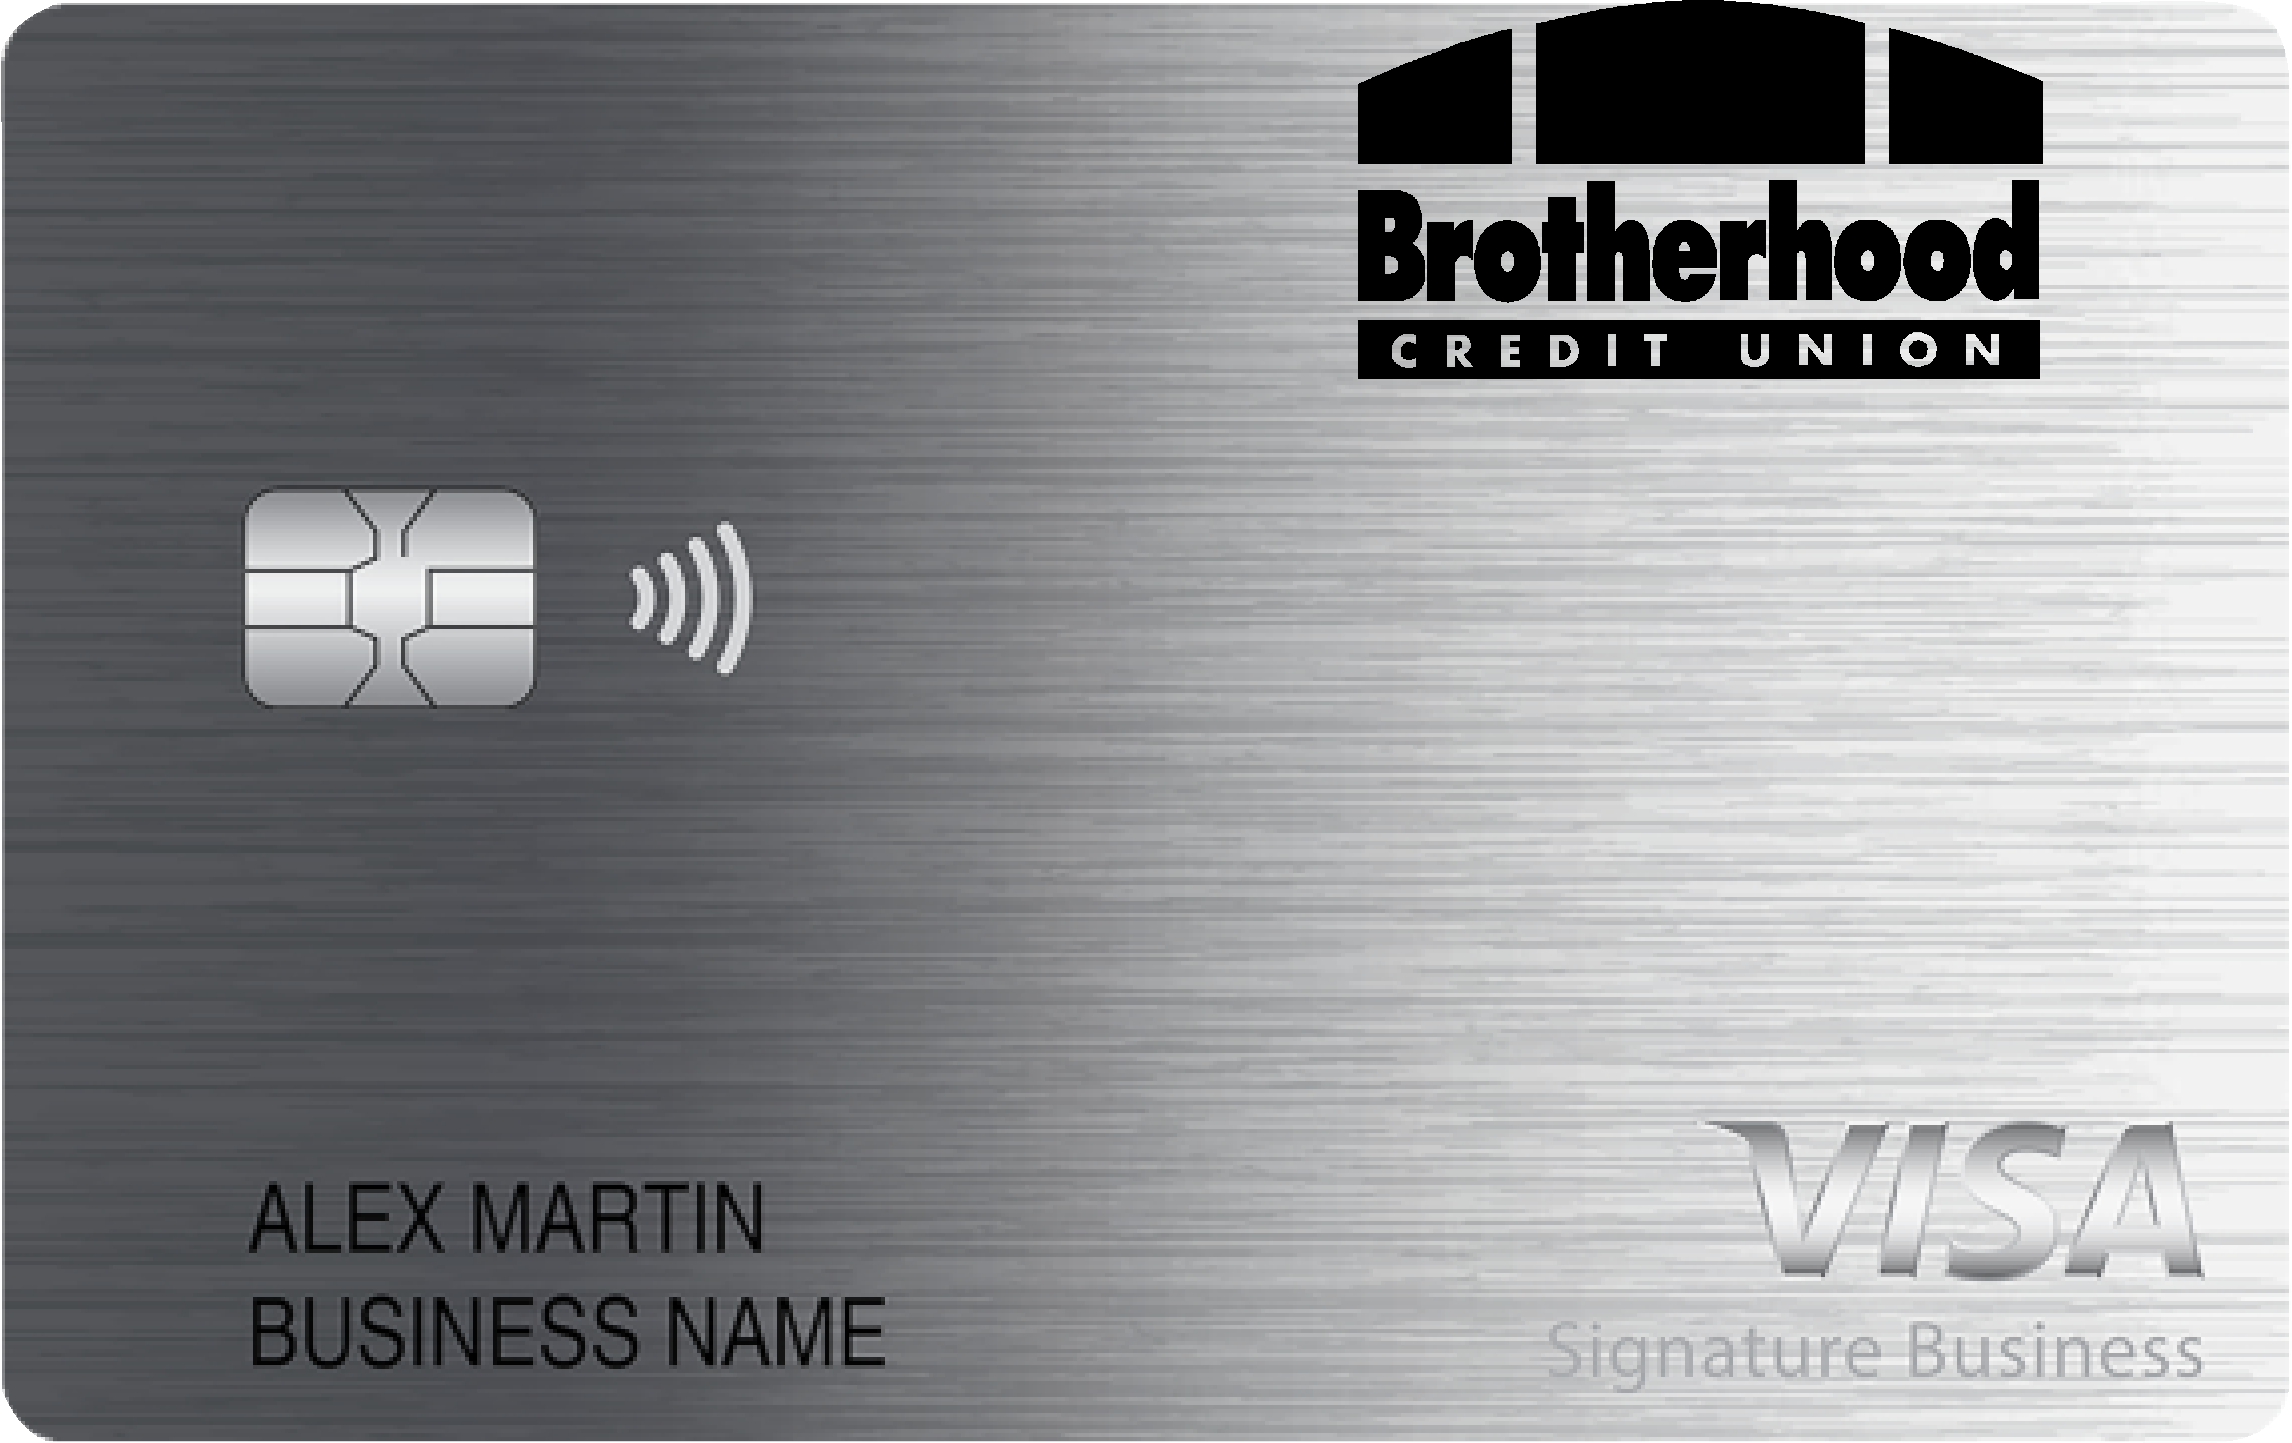 Brotherhood Credit Union Business Card